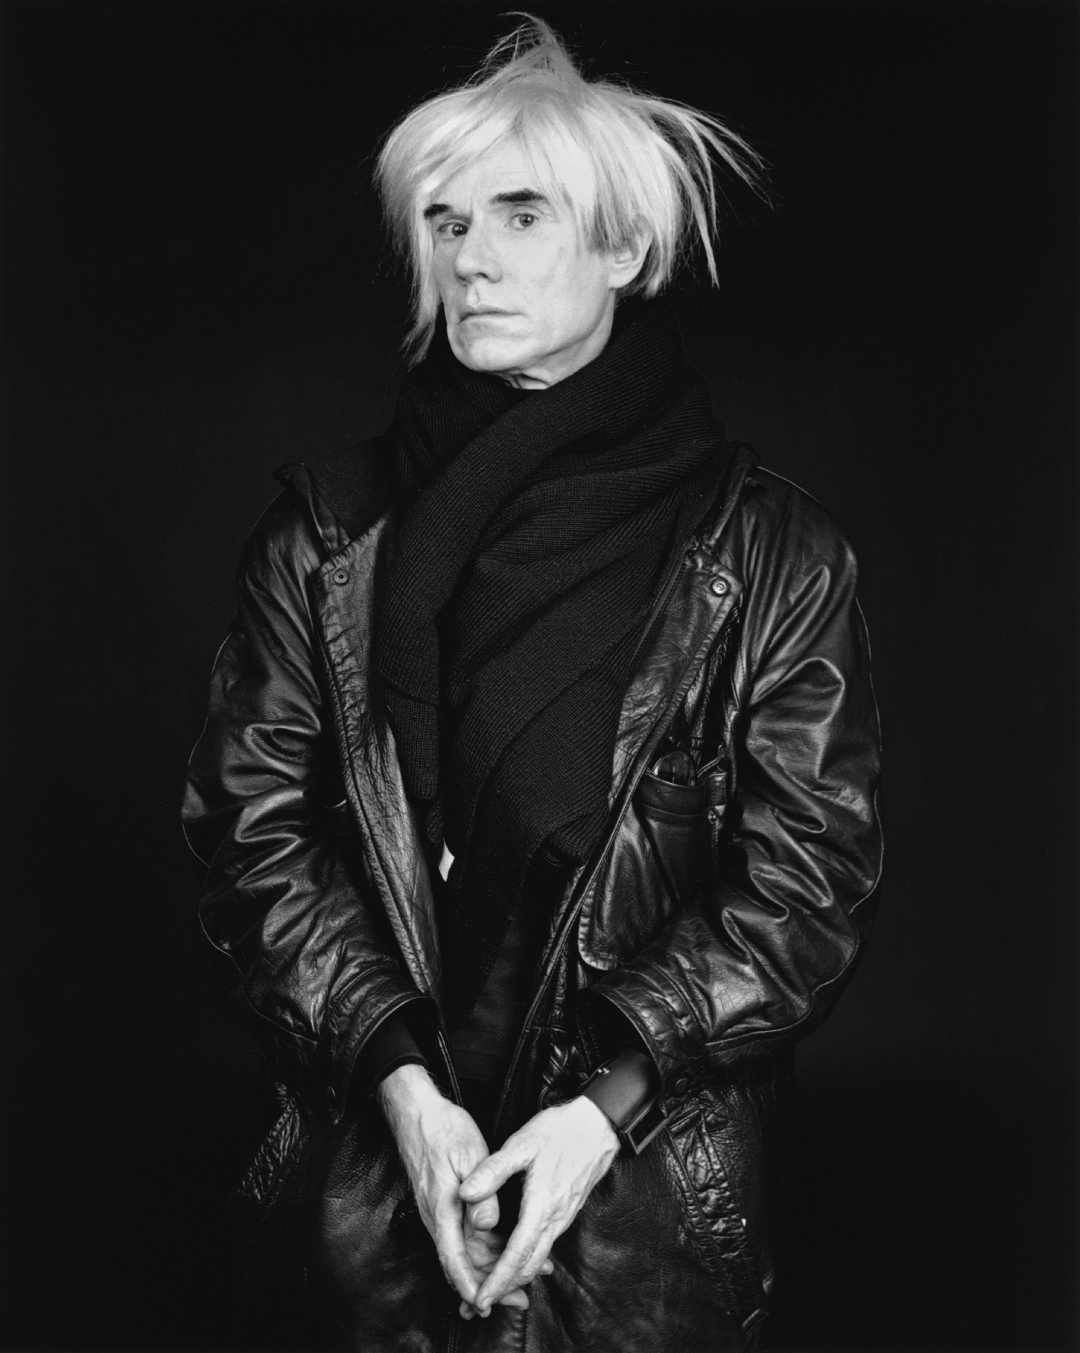 Robert Mapplethorpe: Andy Warhol, 1986. All photographs (c) Robert Mapplethorpe Foundation Inc